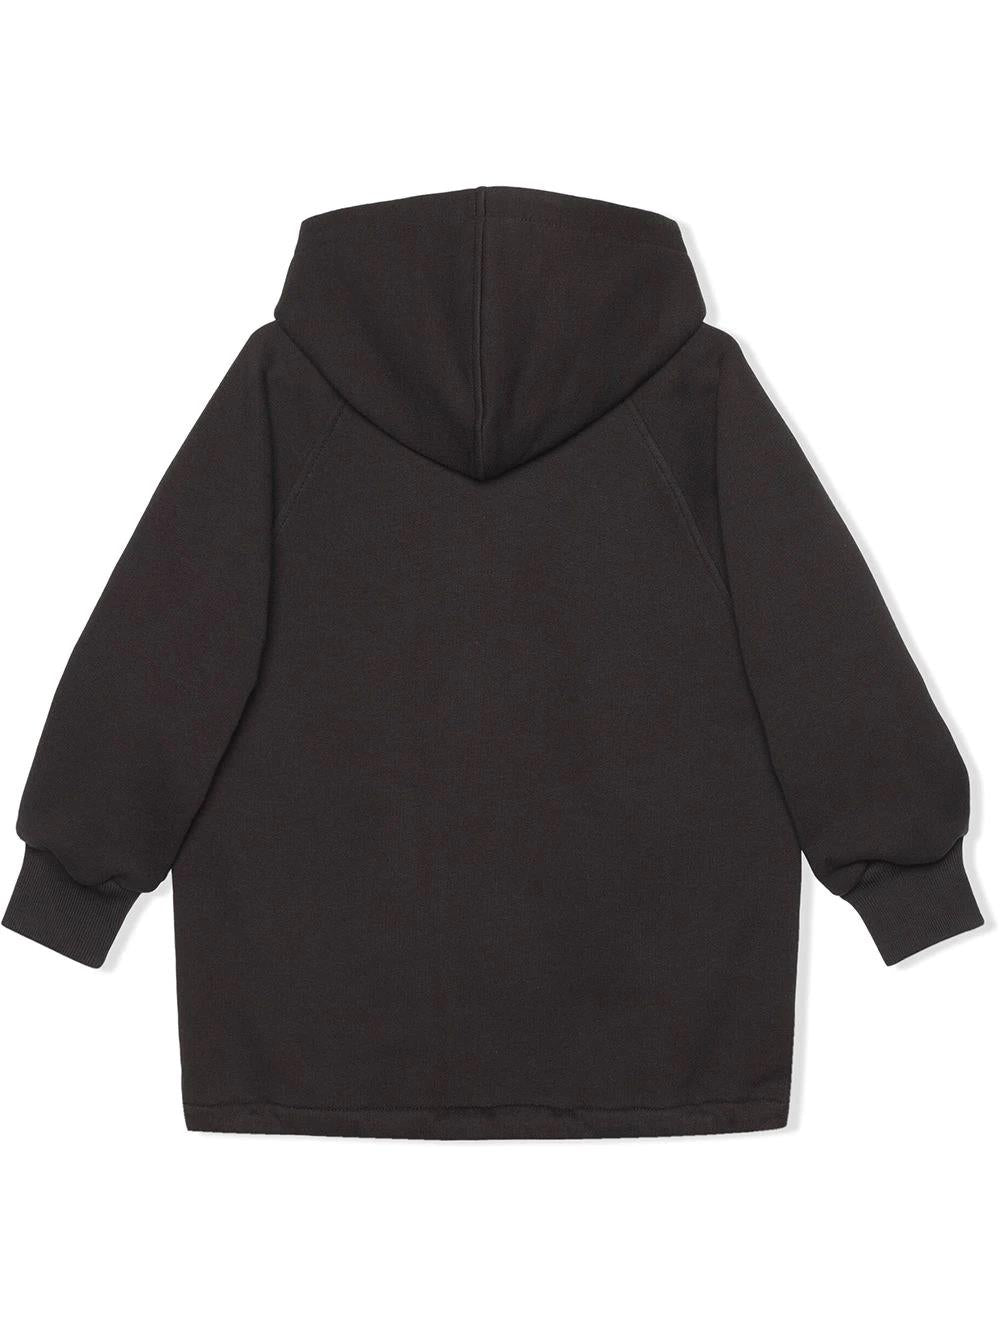 Black cotton boy GUCCI hoodie | Carofiglio Junior